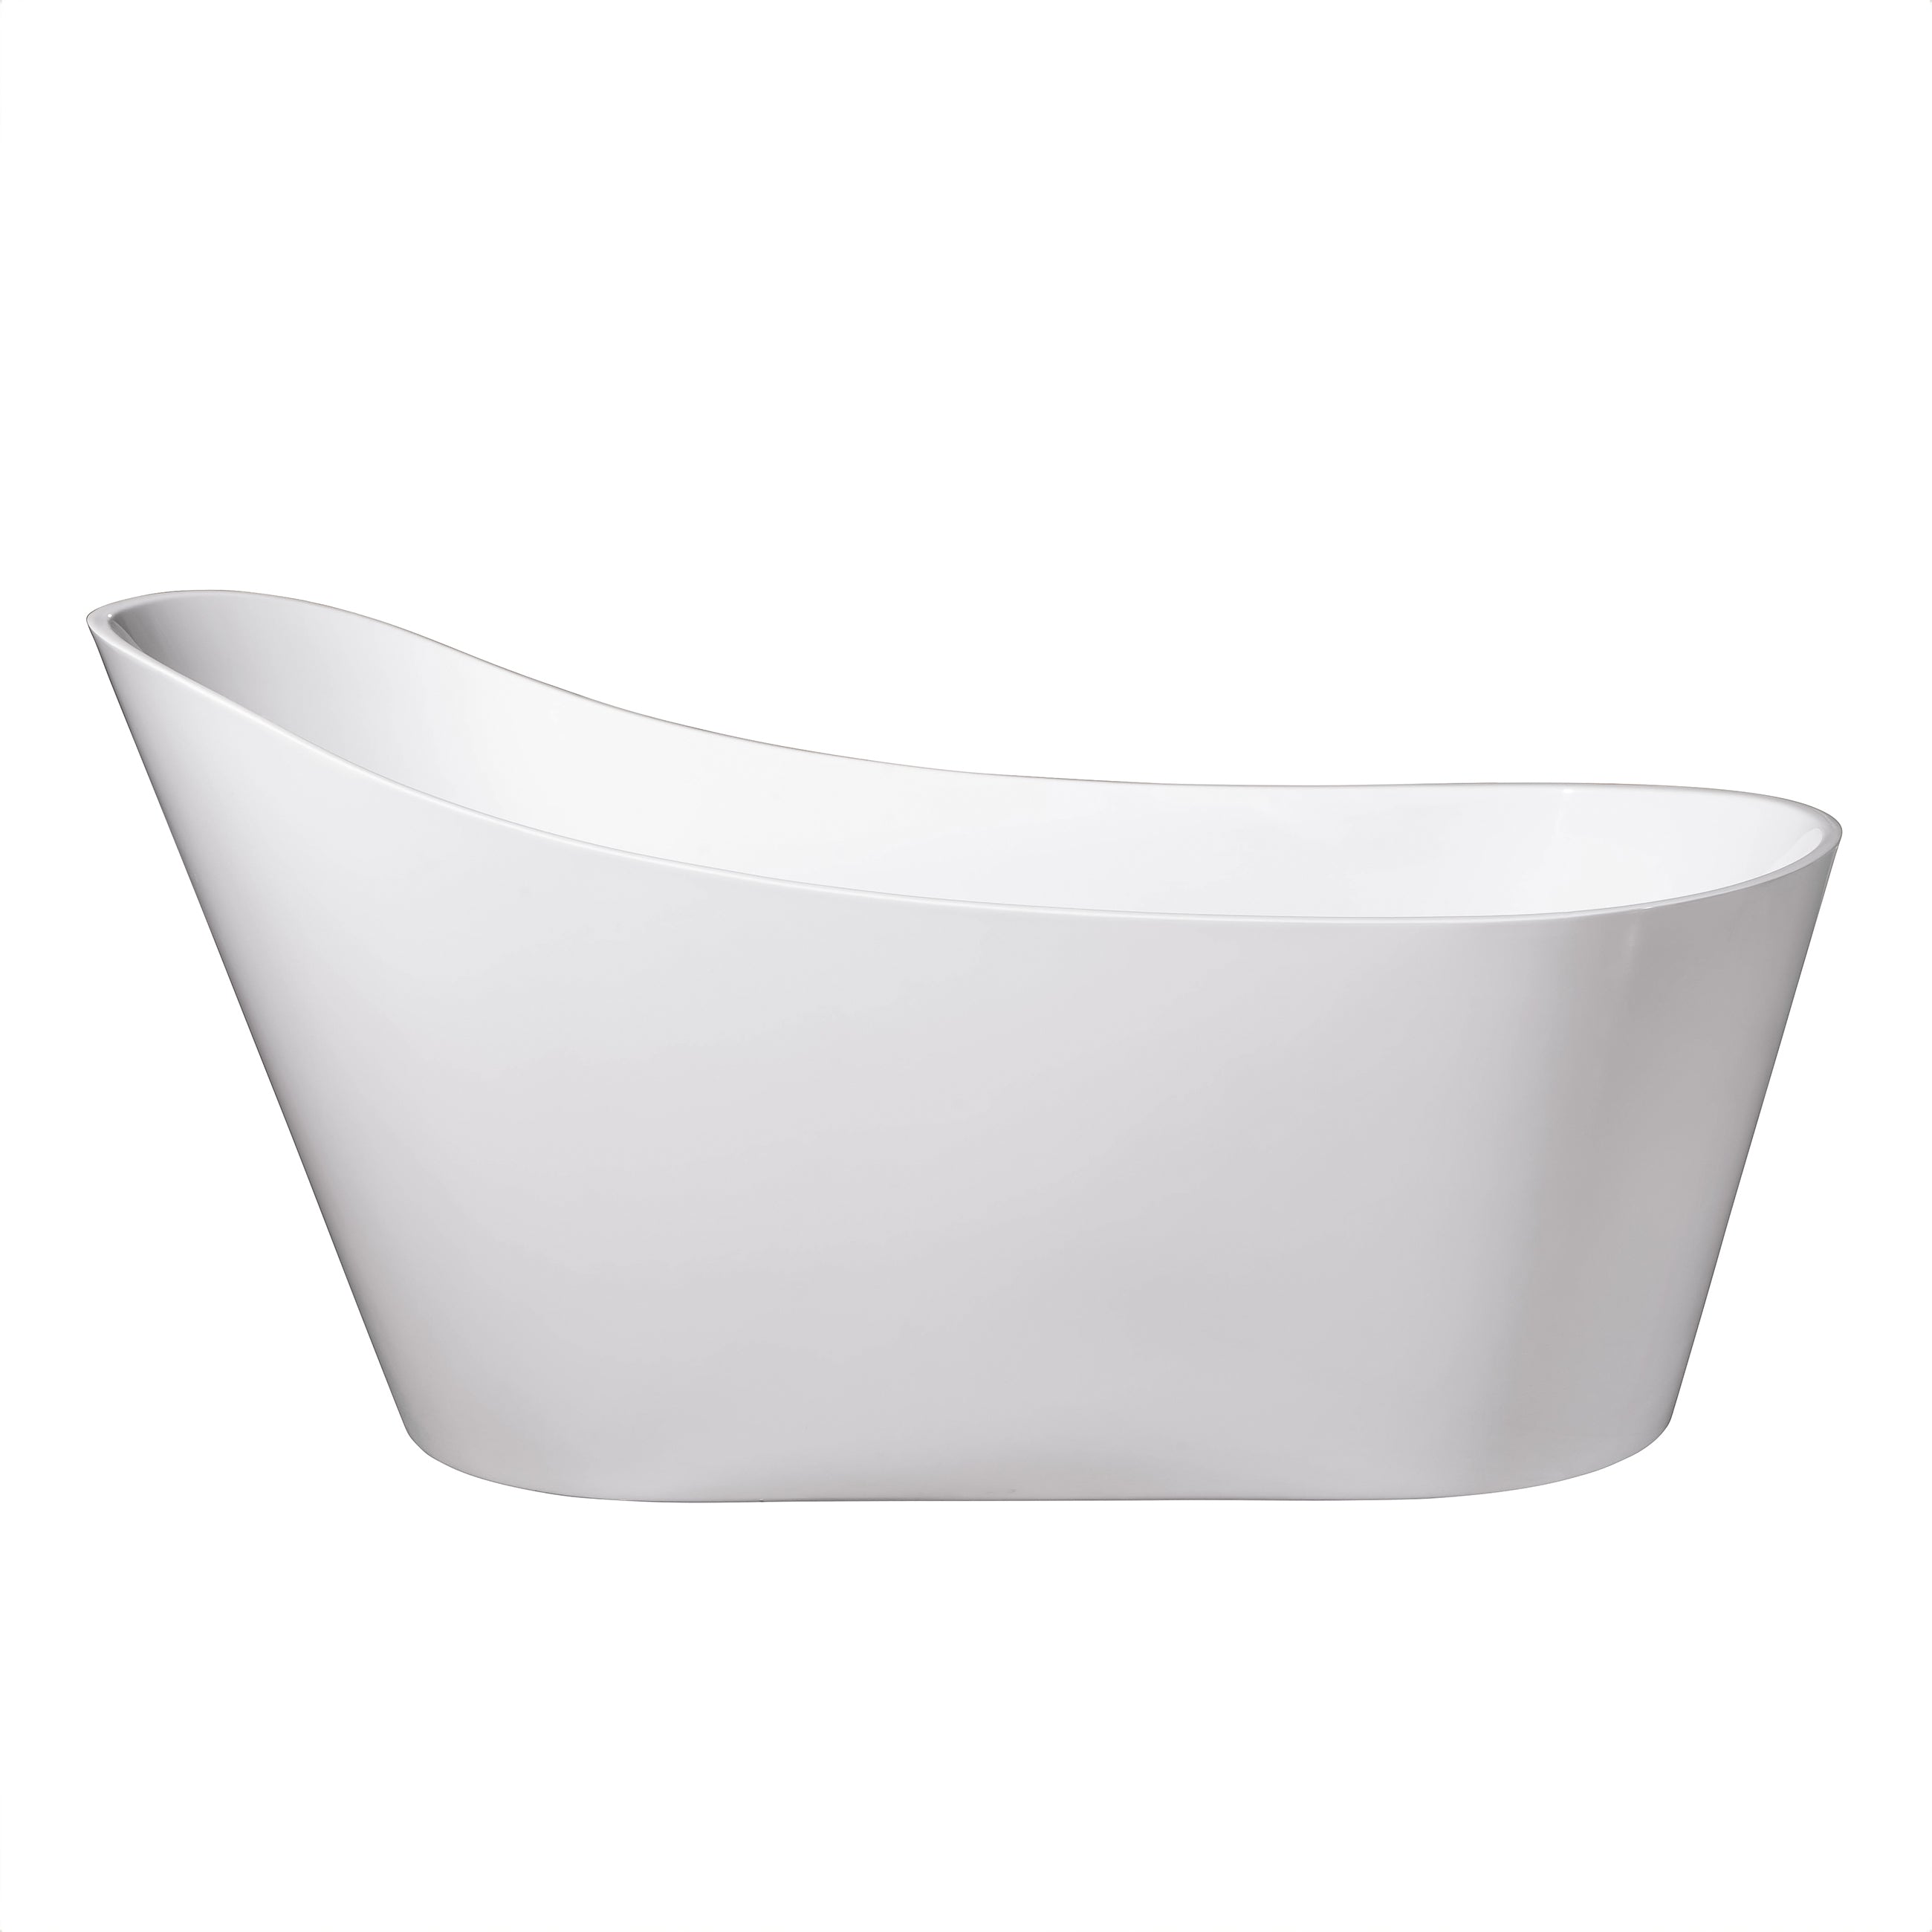 Dreamwerks 66.9" Acrylic Curved Flatbottom Bathtub in Glossy White - Dreamwerks